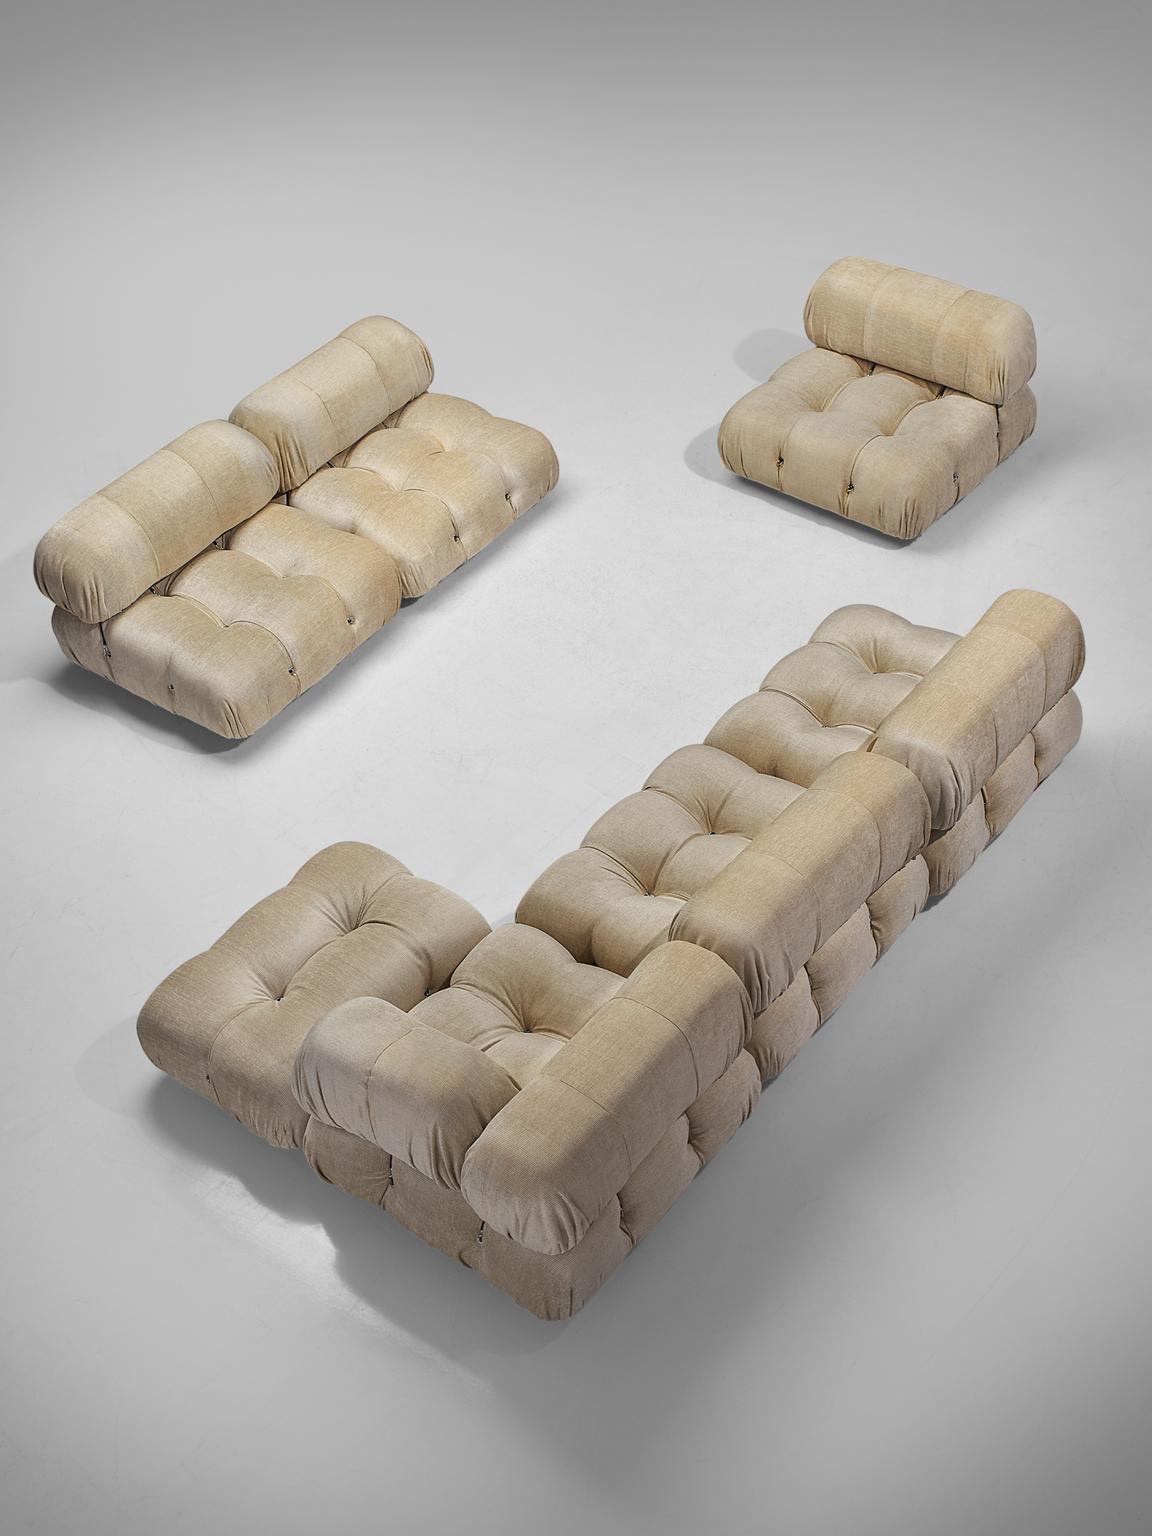 Italian Mario Bellini 'Camaleonda' Modular Sofa Reupholstered in Ivory White Fabric